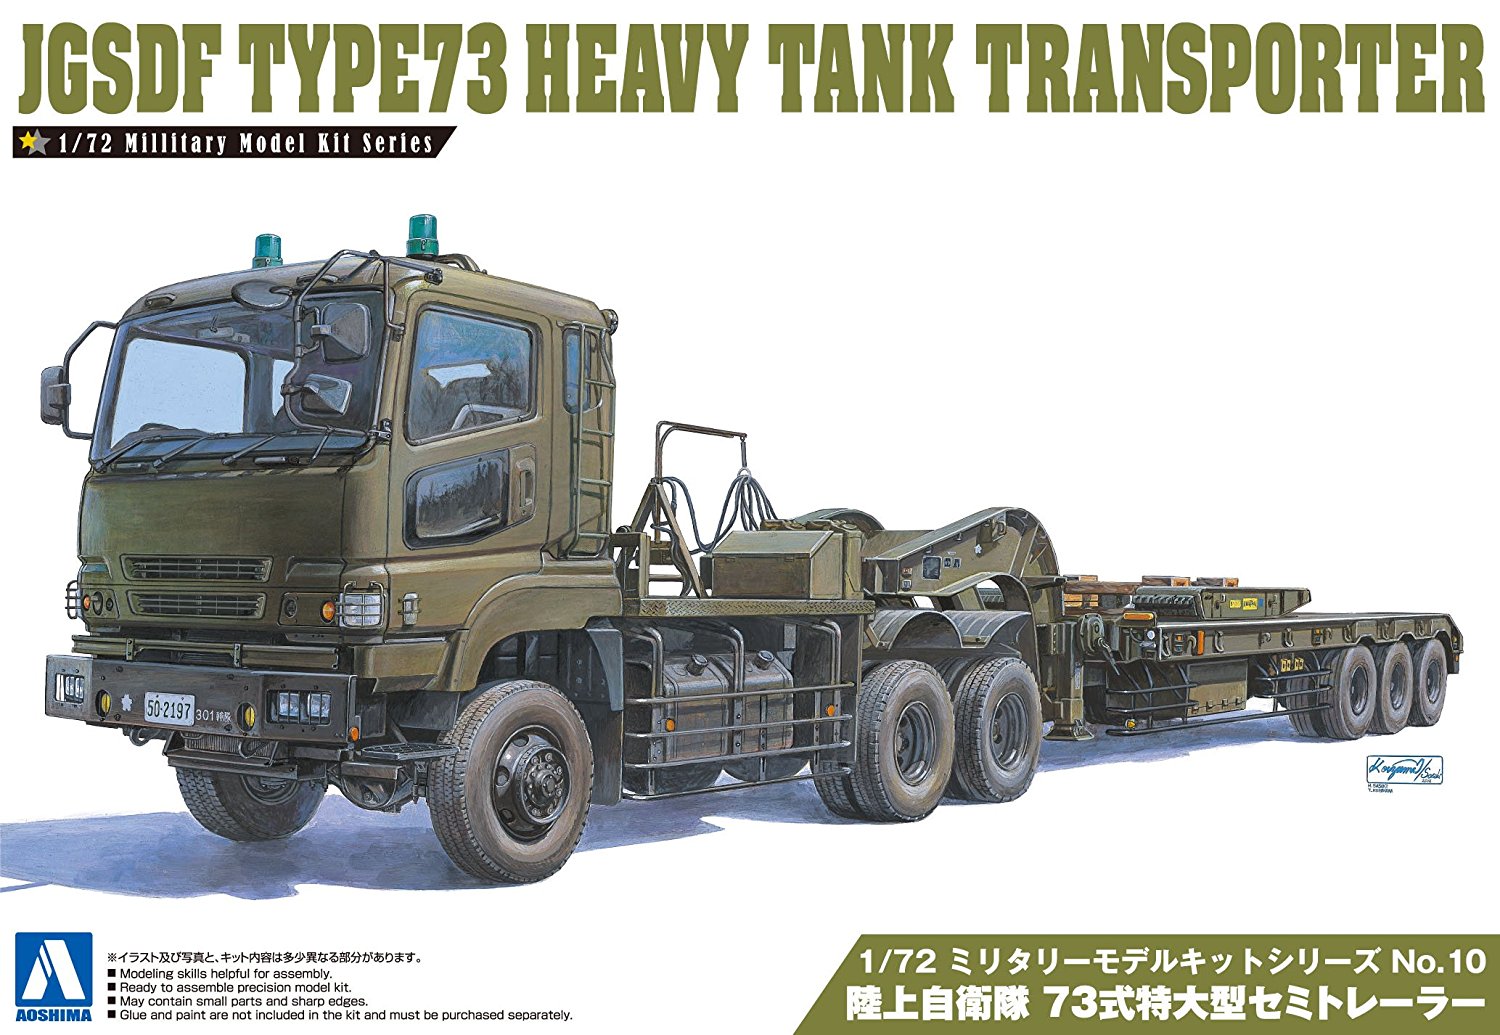 JGSDF Type 73 Heavy Tank Transporter